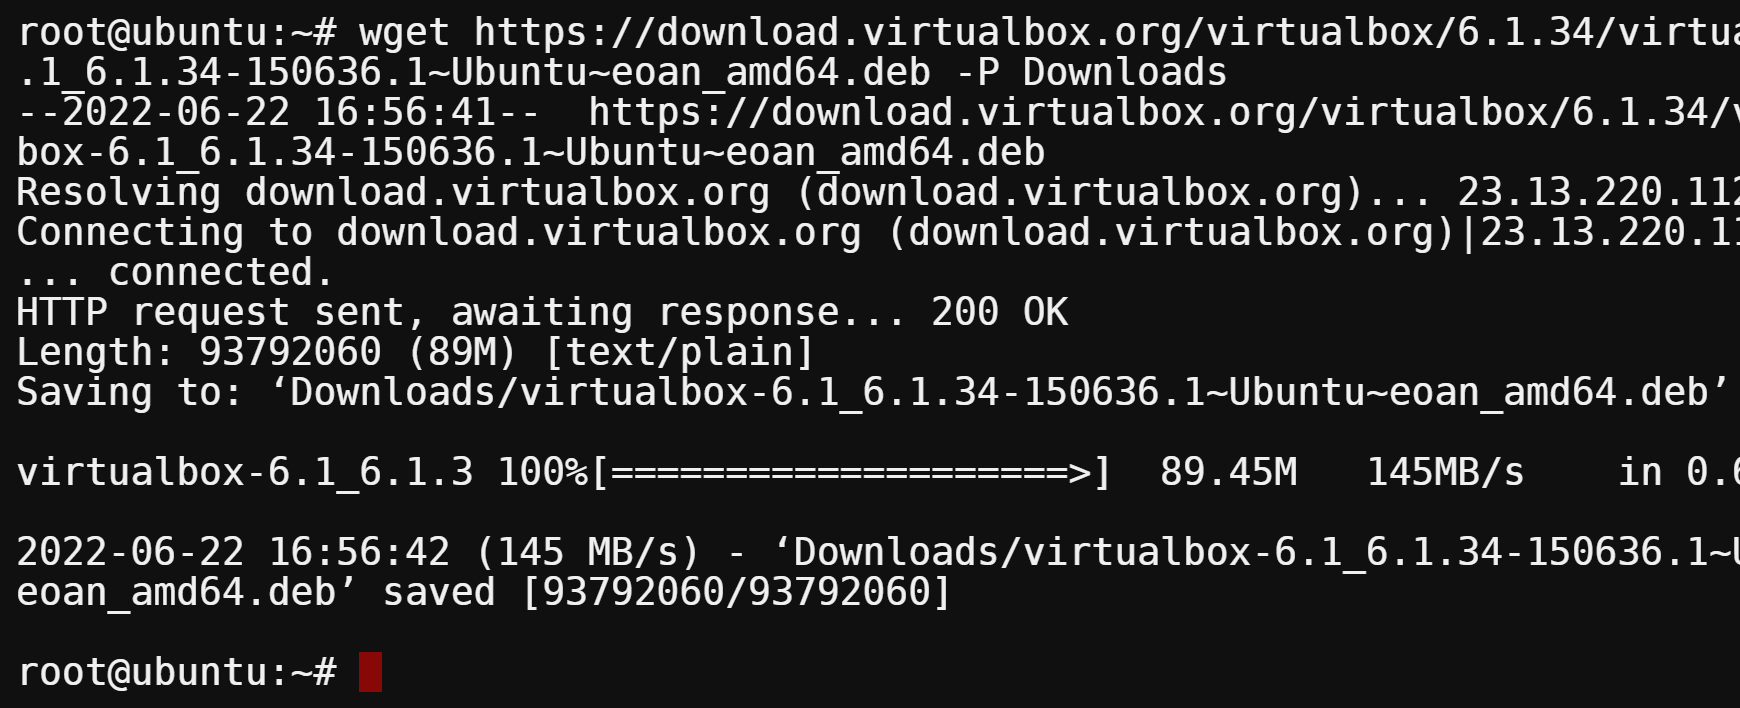 Downloading the VirtualBox deb package